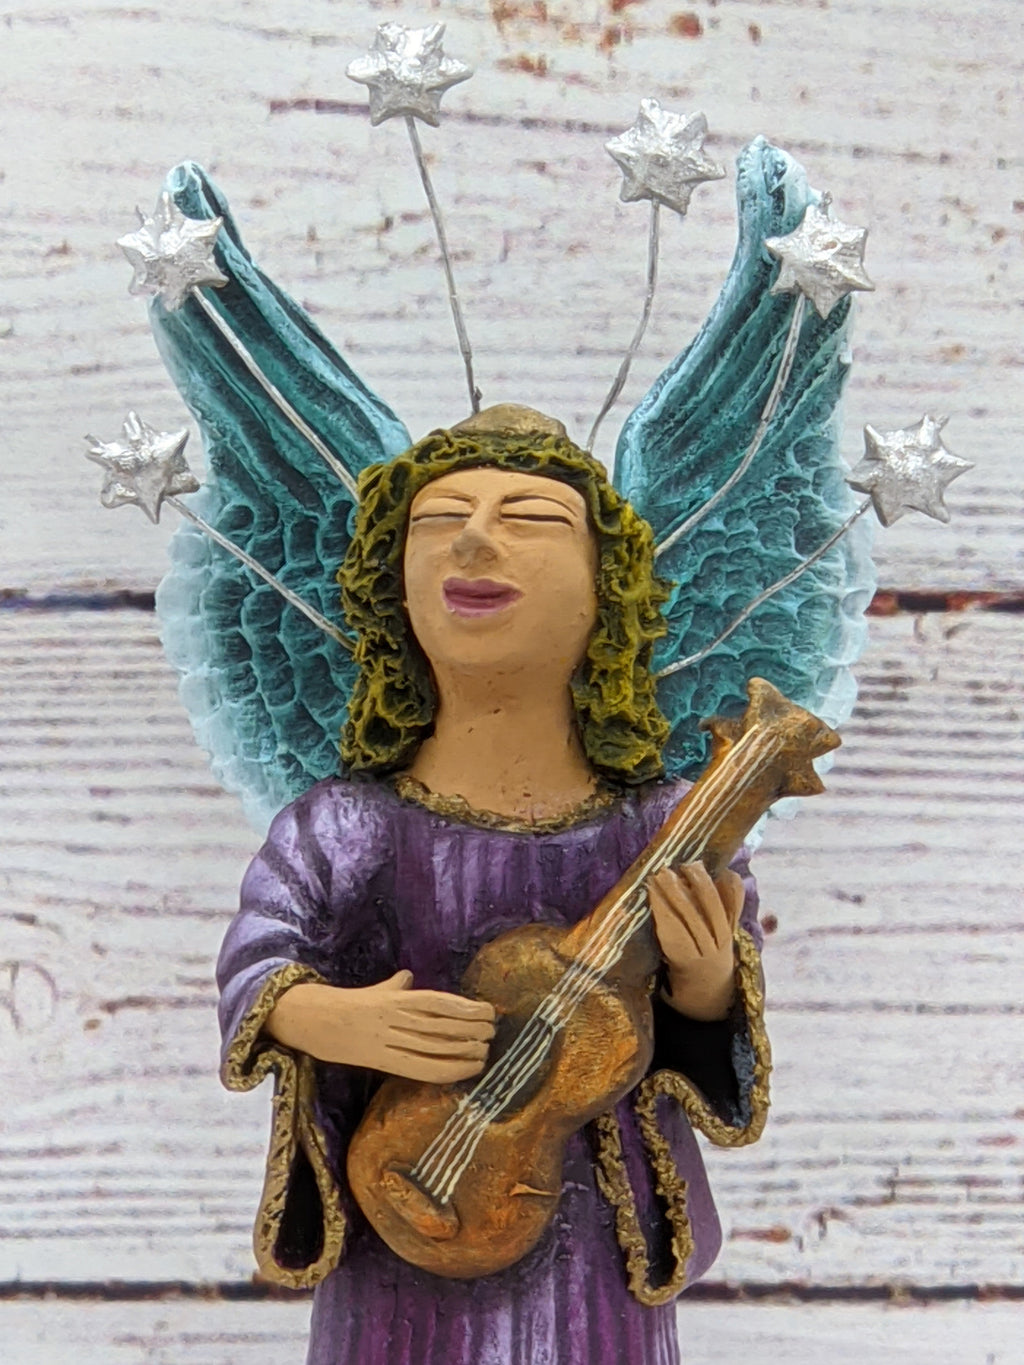 Christmas Decorations, Angel with Guitar, Christmas Angel Home Decor, Handmade Angel Art from Oaxaca Mexico, Original Sculpture